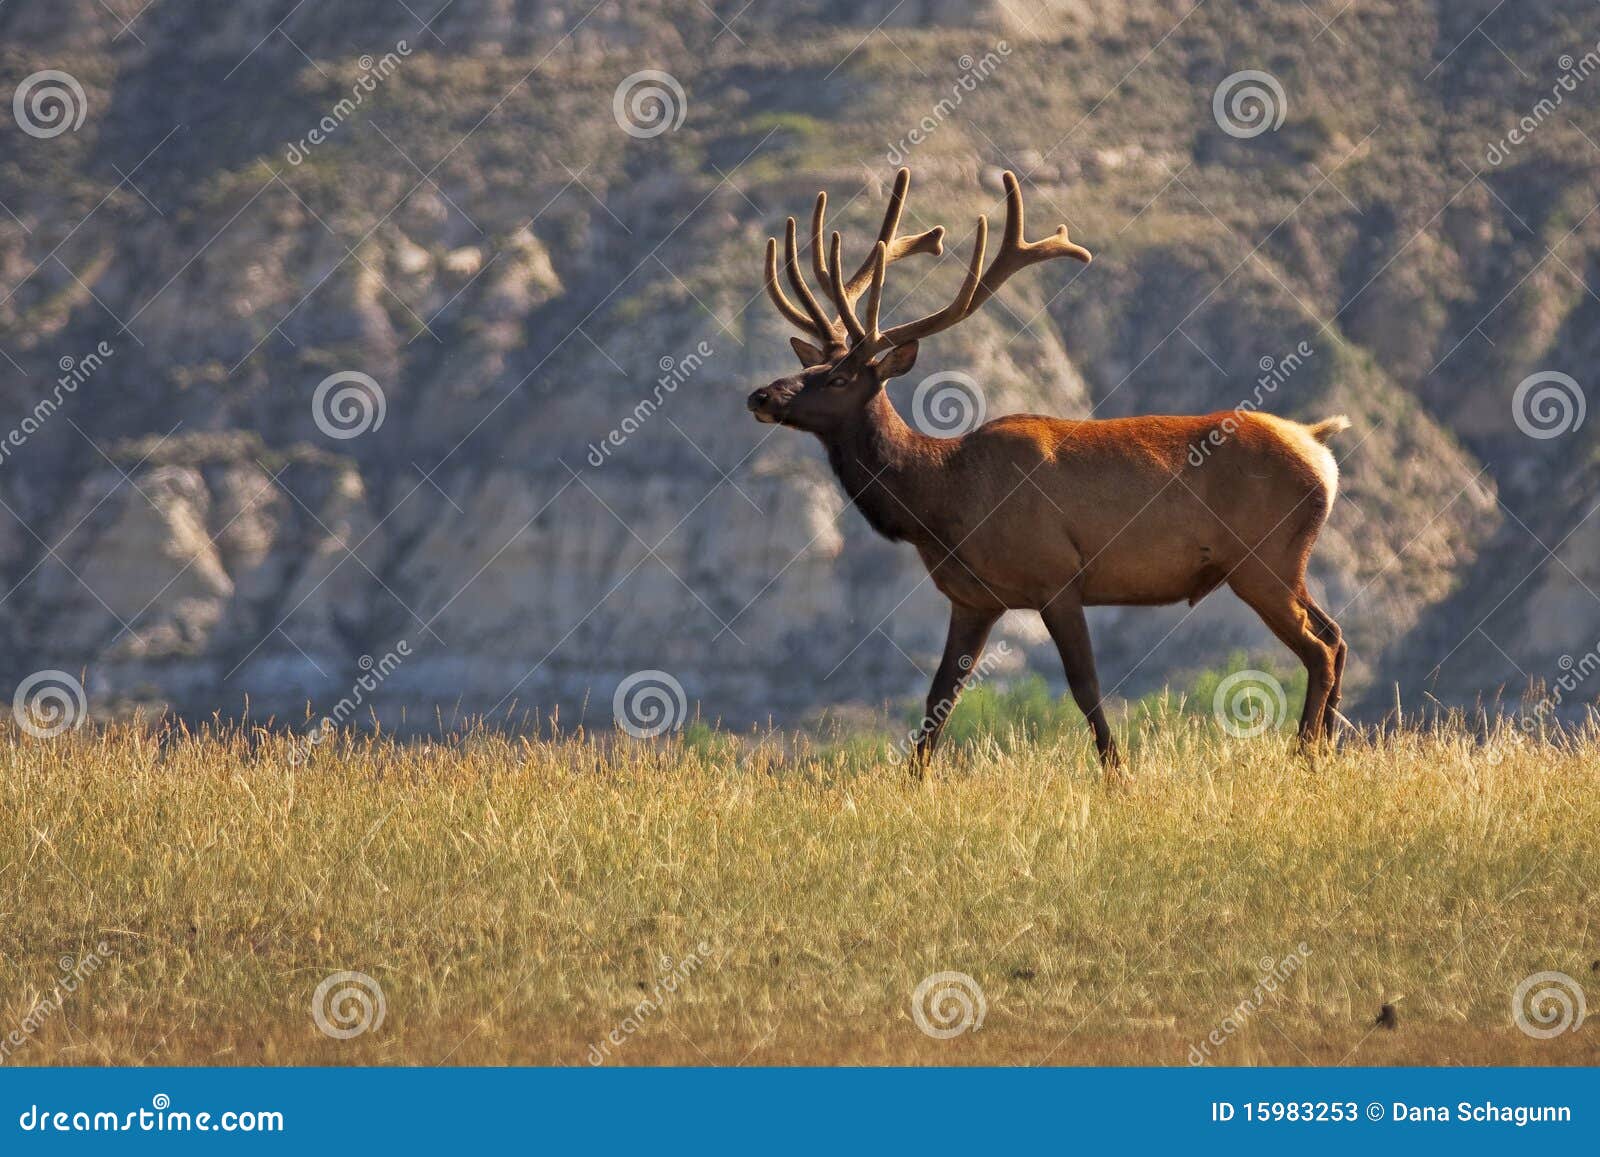 large elk in the wild